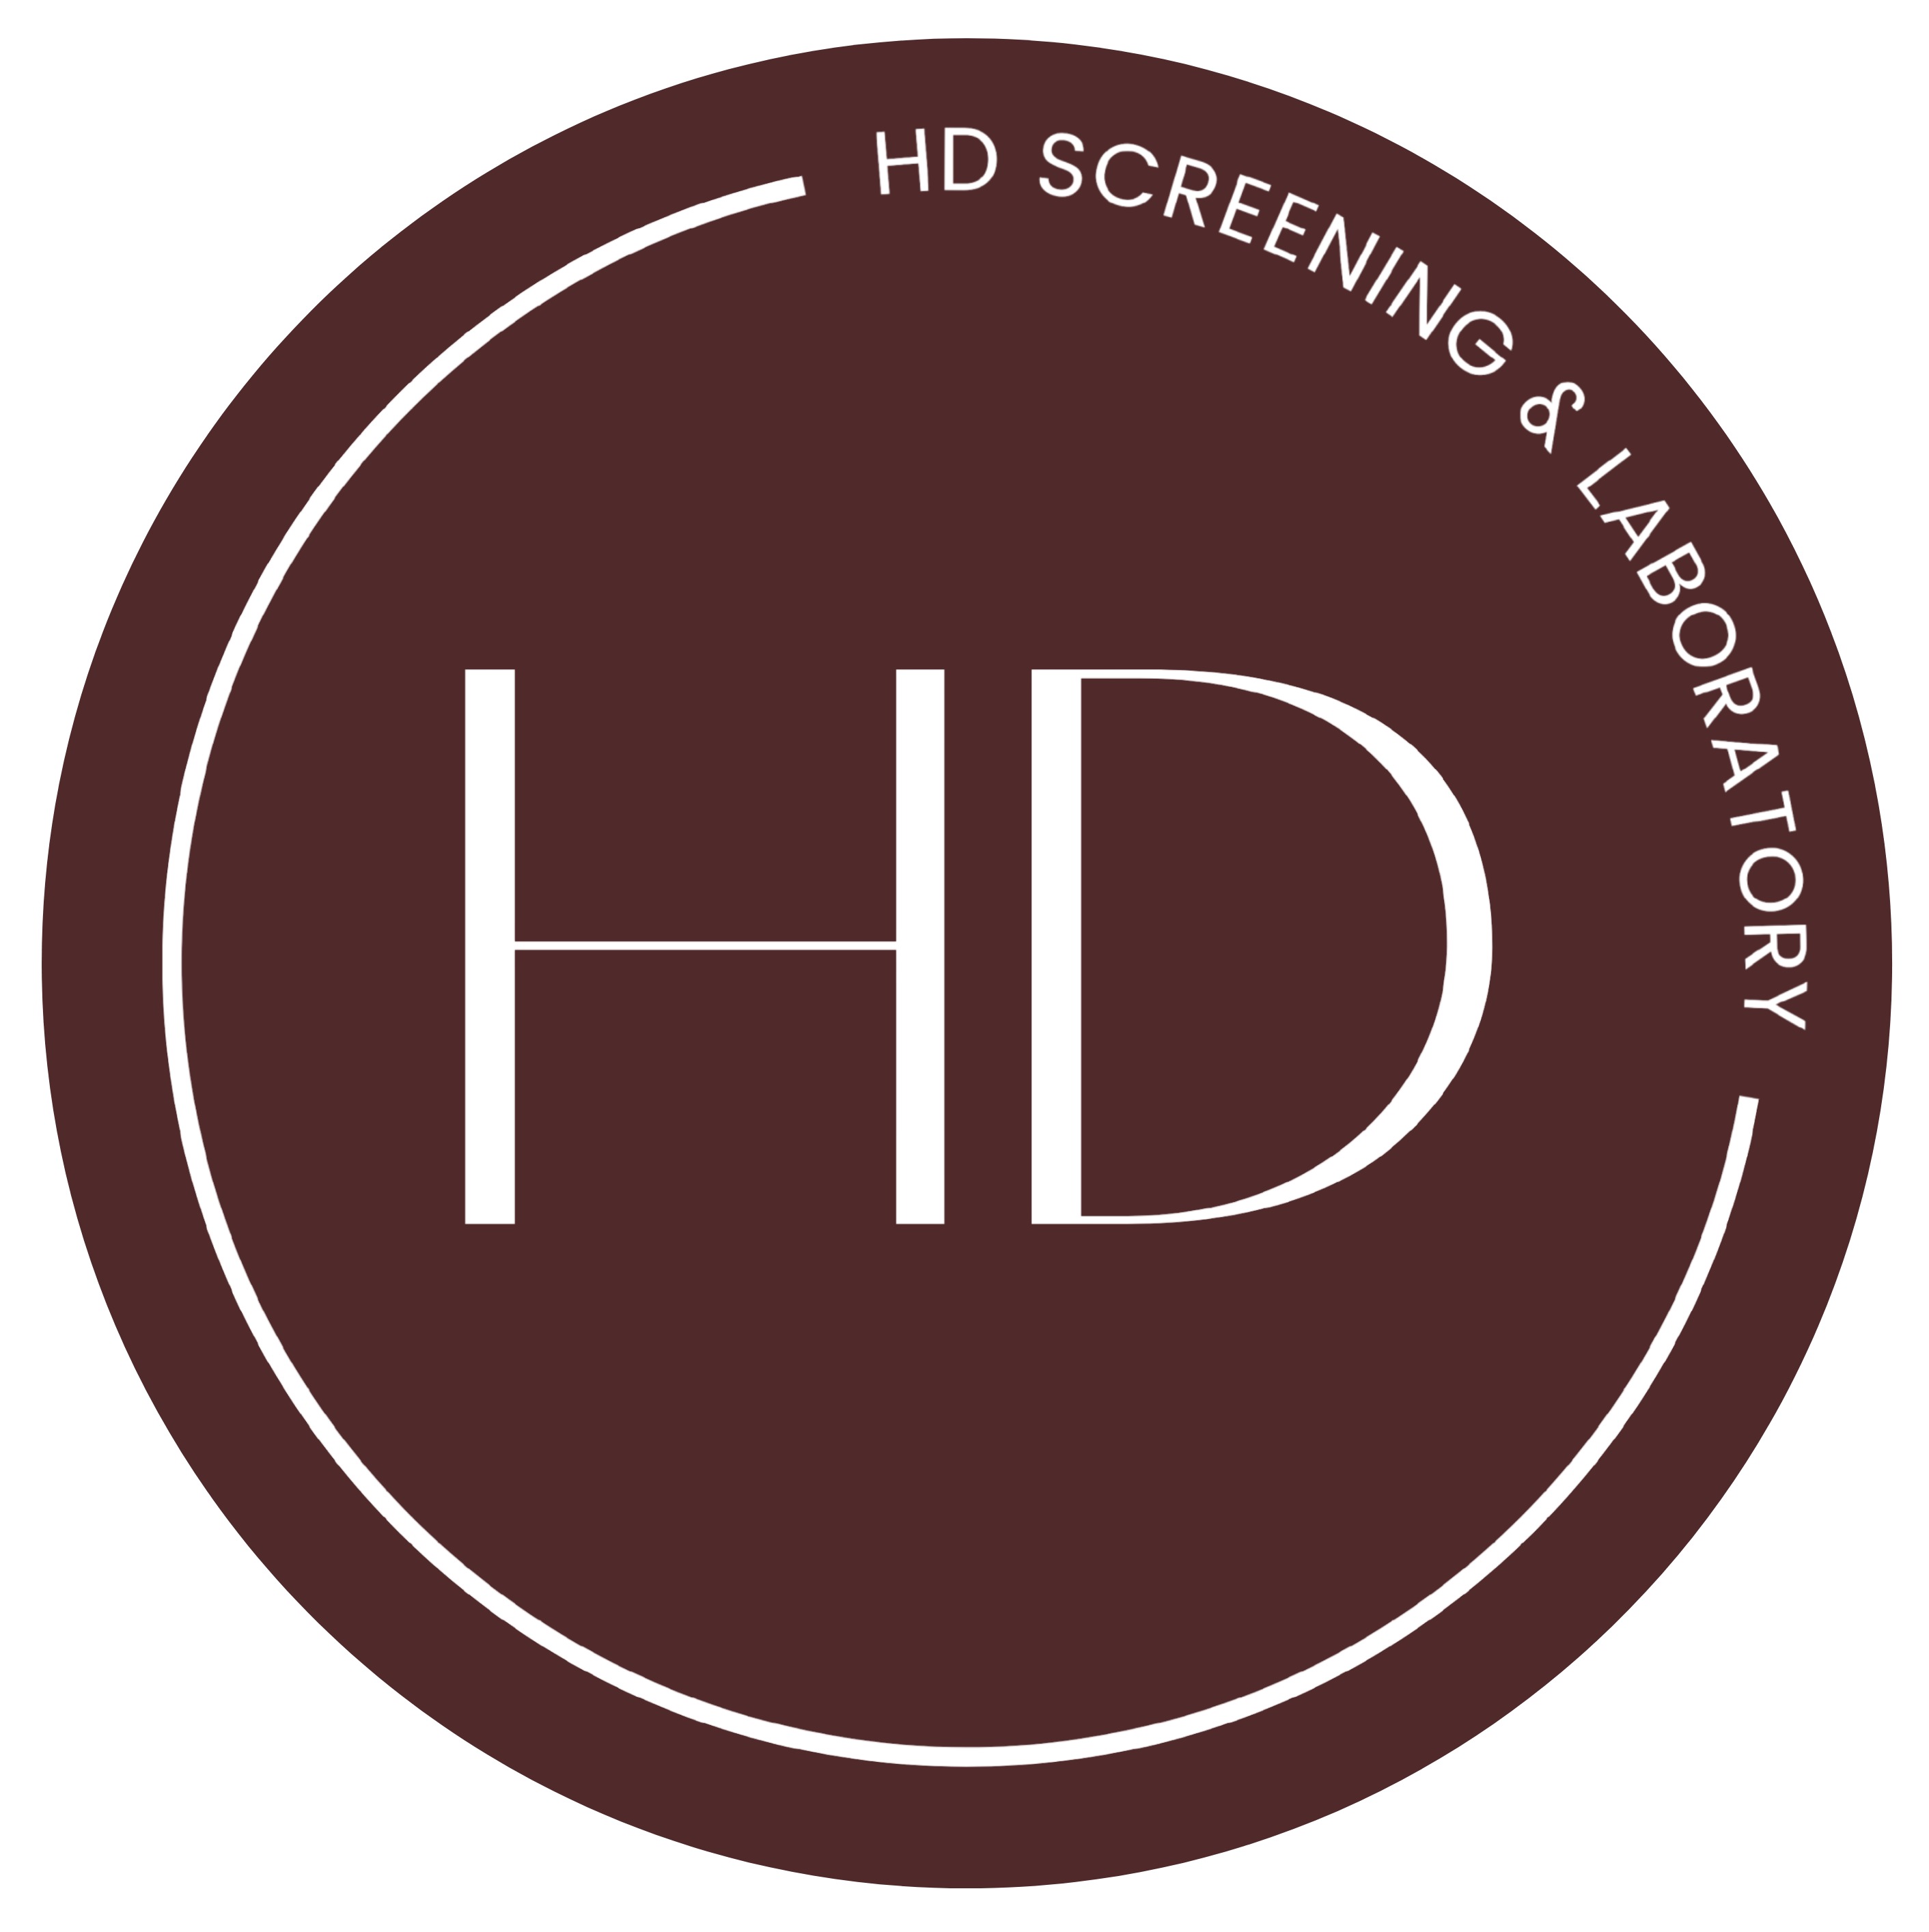 HD Screening and Laboratory Logo